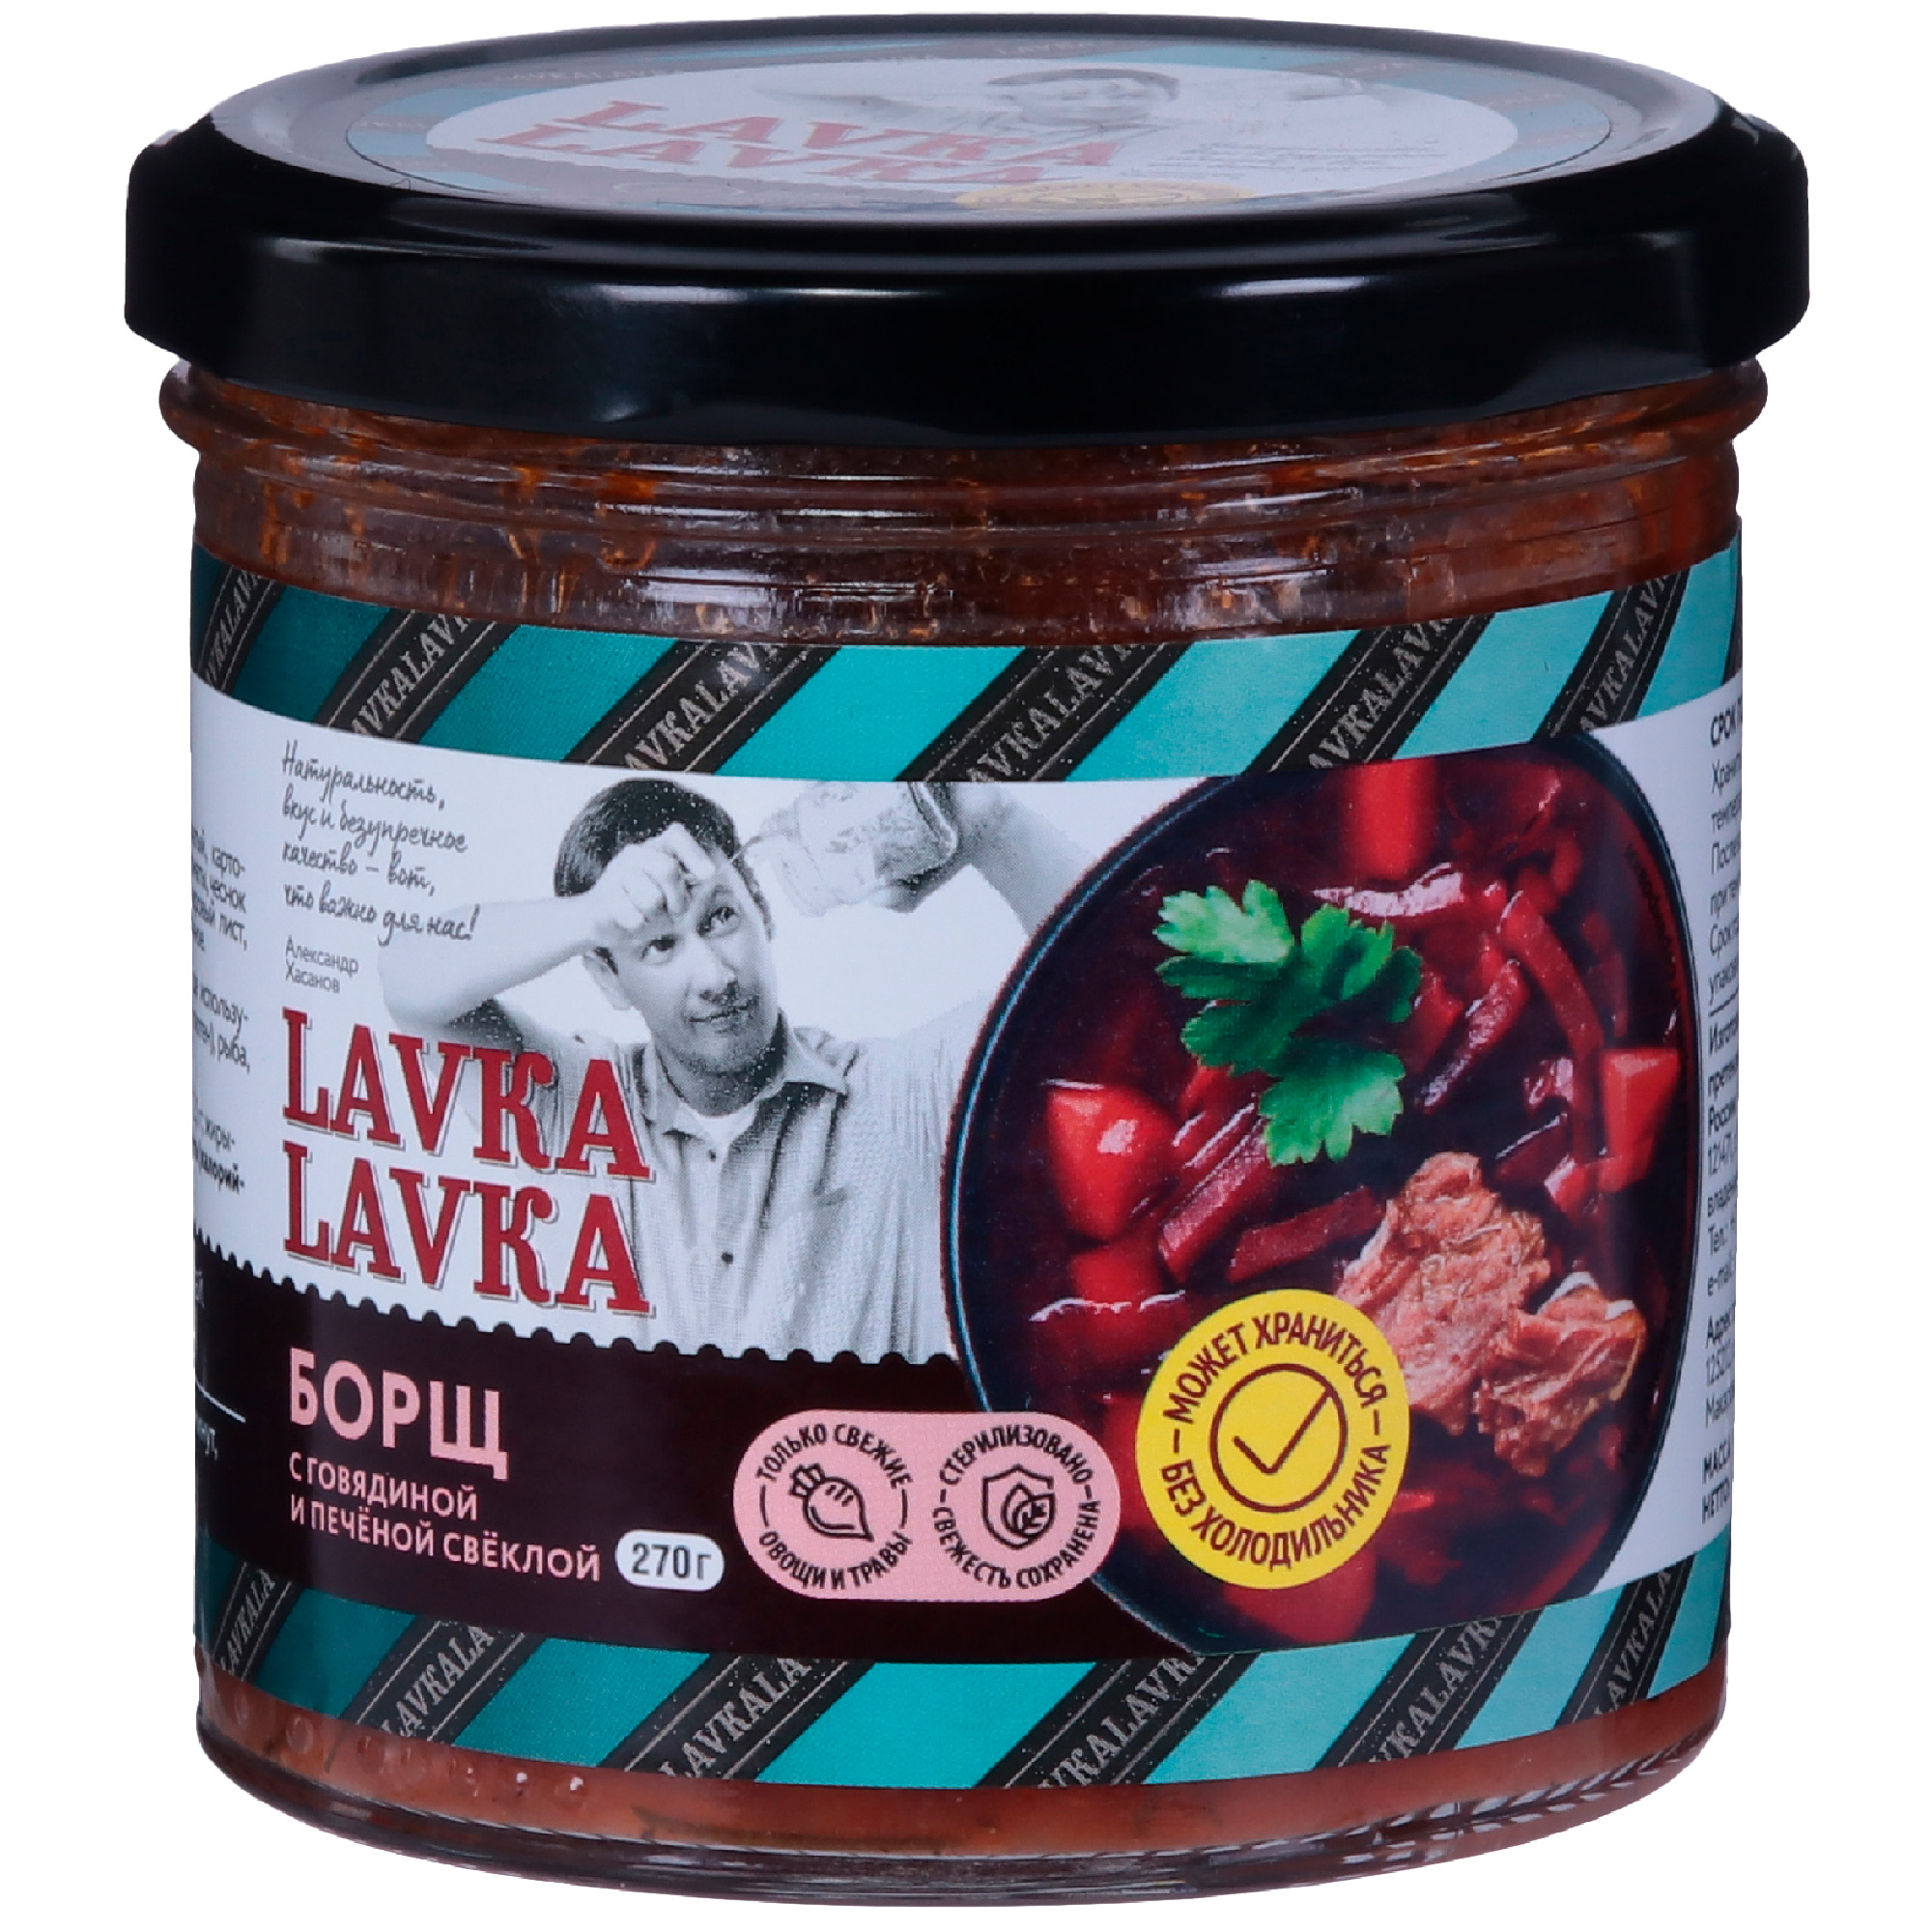 Борщ LavkaLavka с говядиной, 270 г суп lavkalavka солянка 350 г